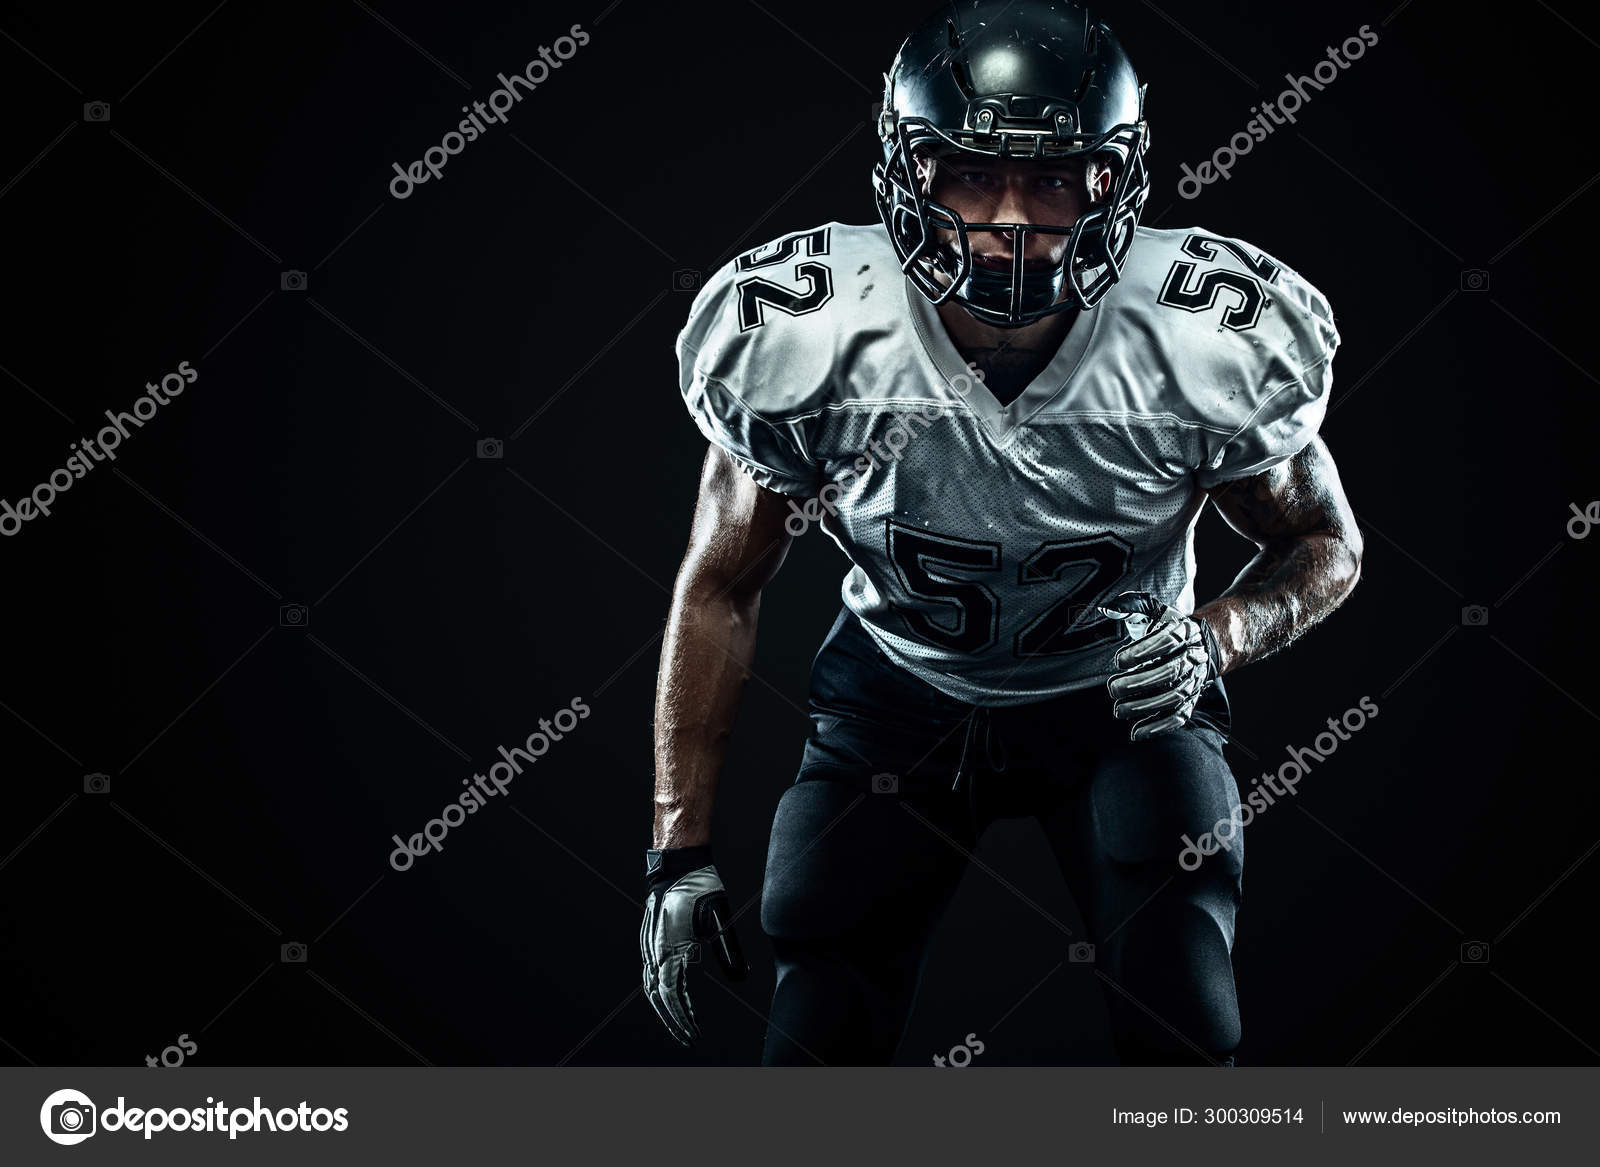 American Football Sportsman Player In Helmet On Black Background Sport And Motivation Team Sports Stock Photo C Mikeorlov